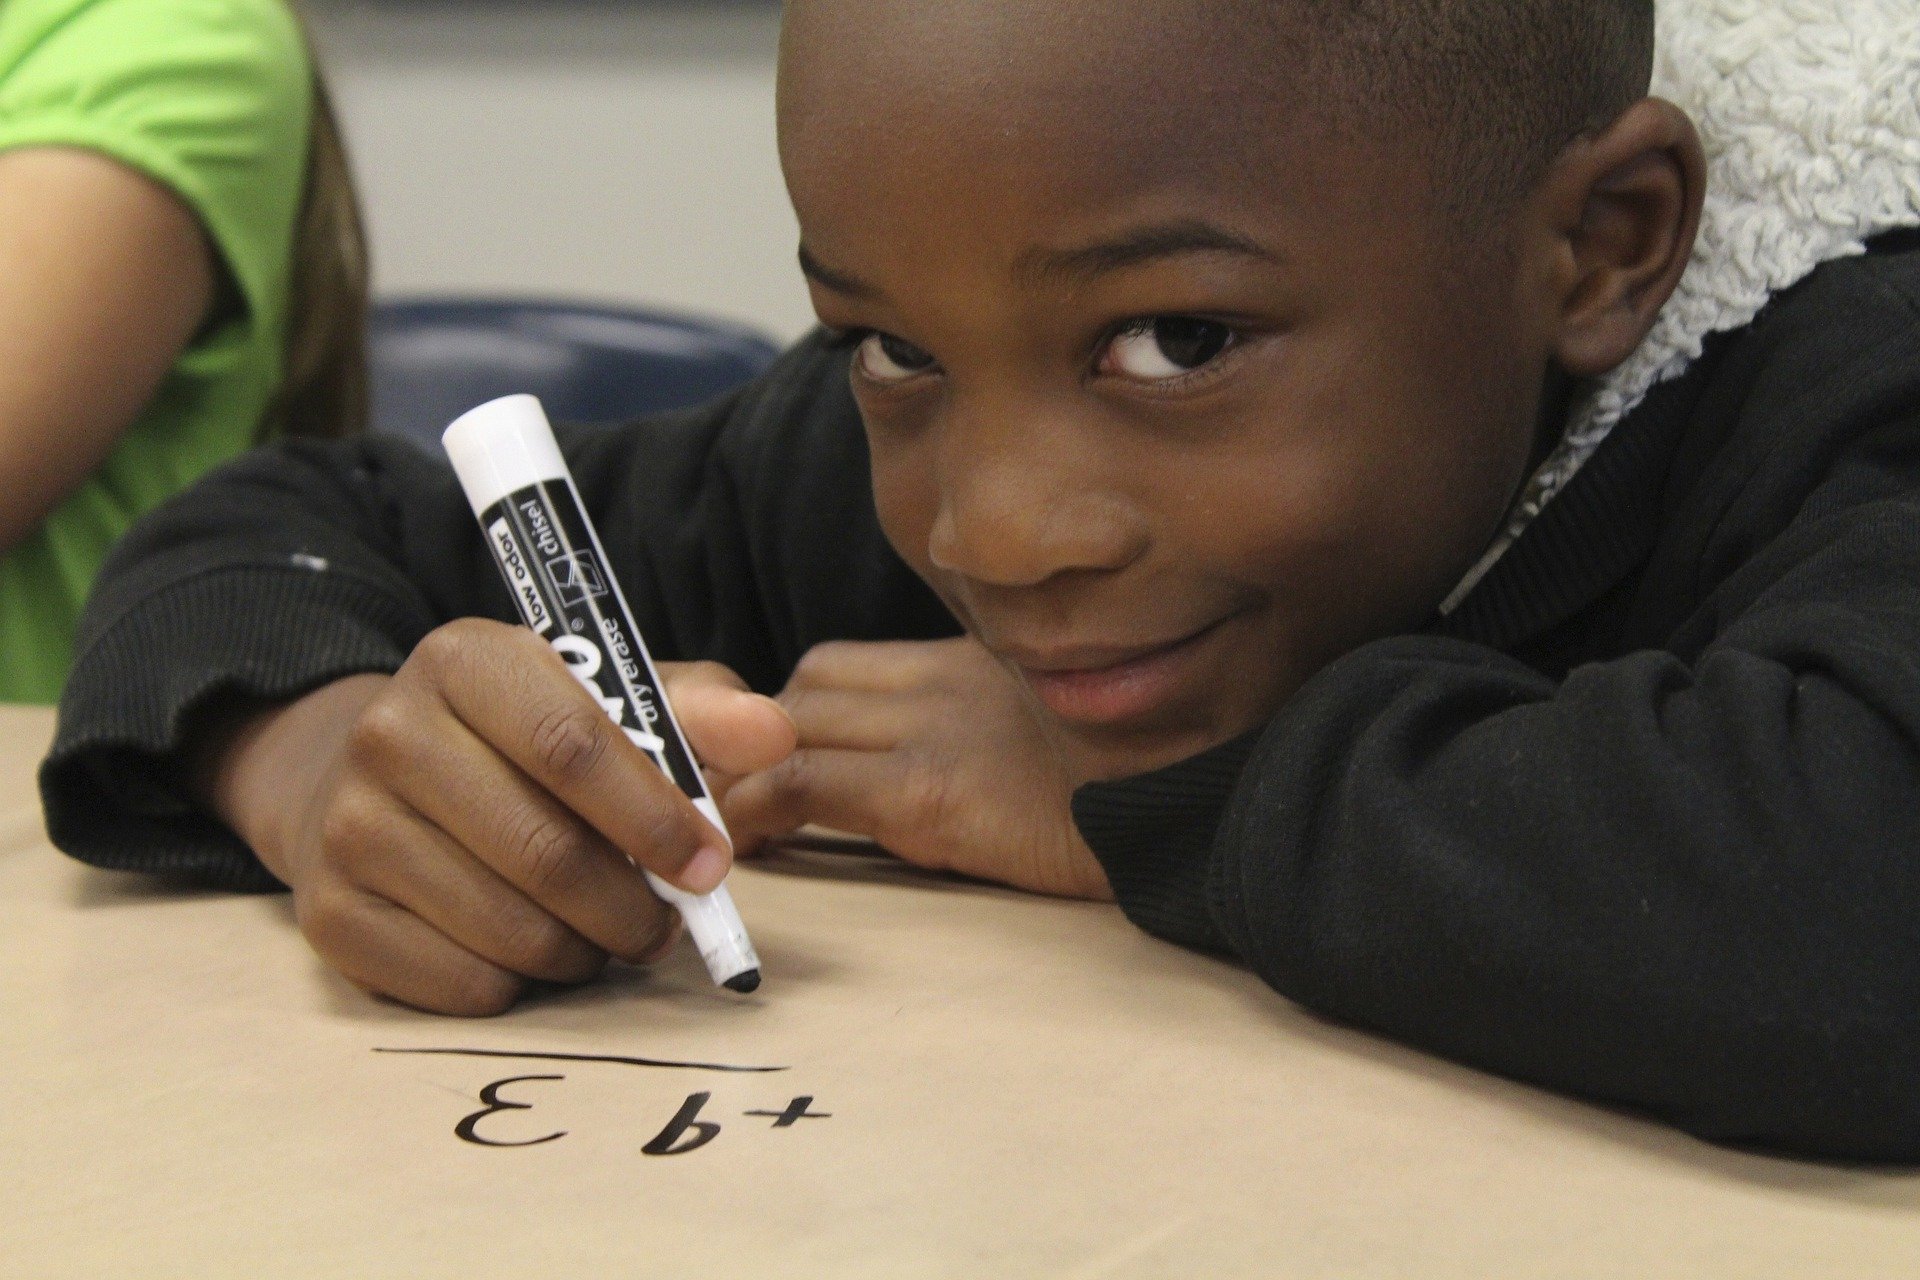 Cute little boy learning math in class. | Source: Pixabay